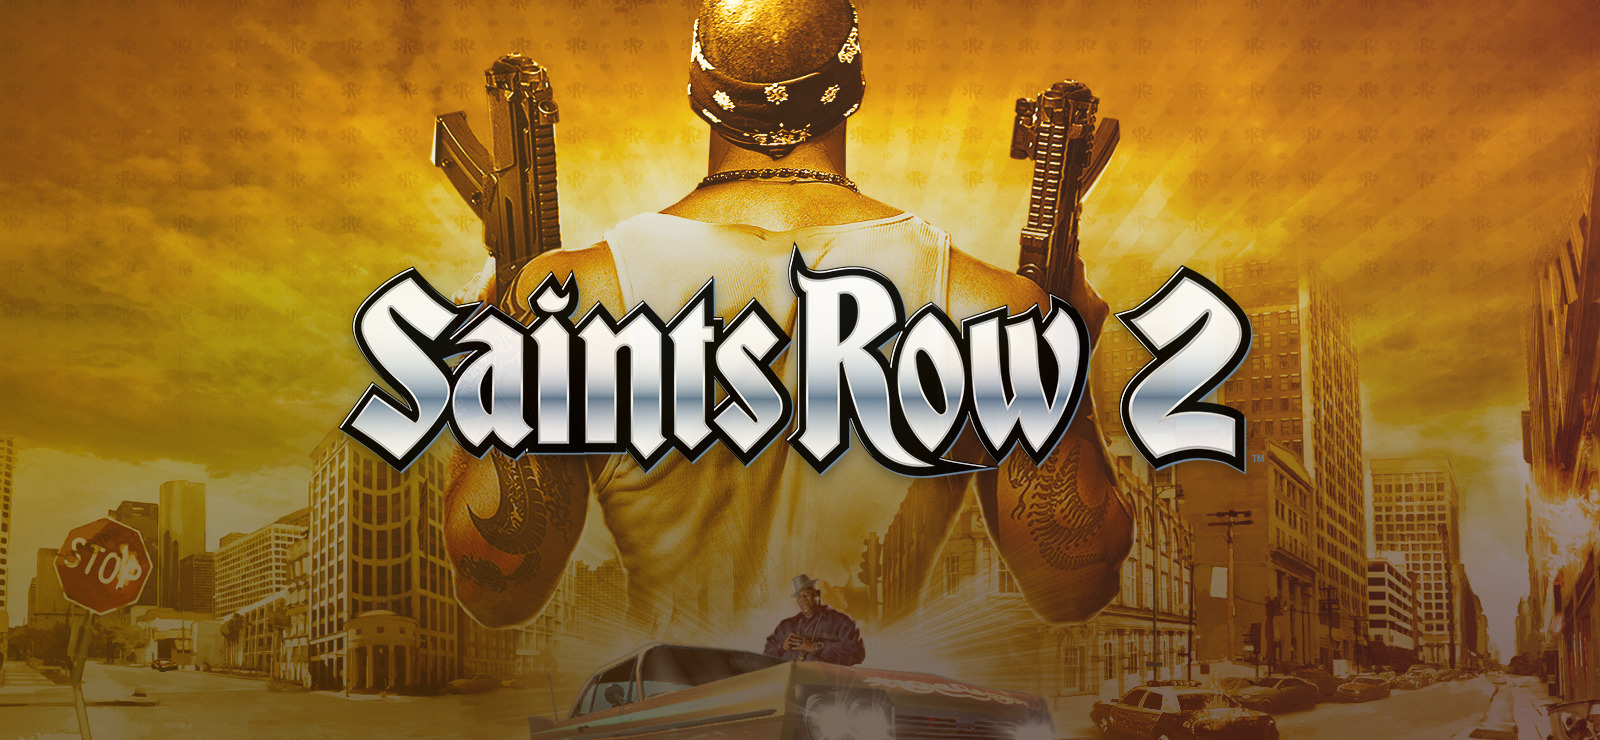 free download saints row reboot